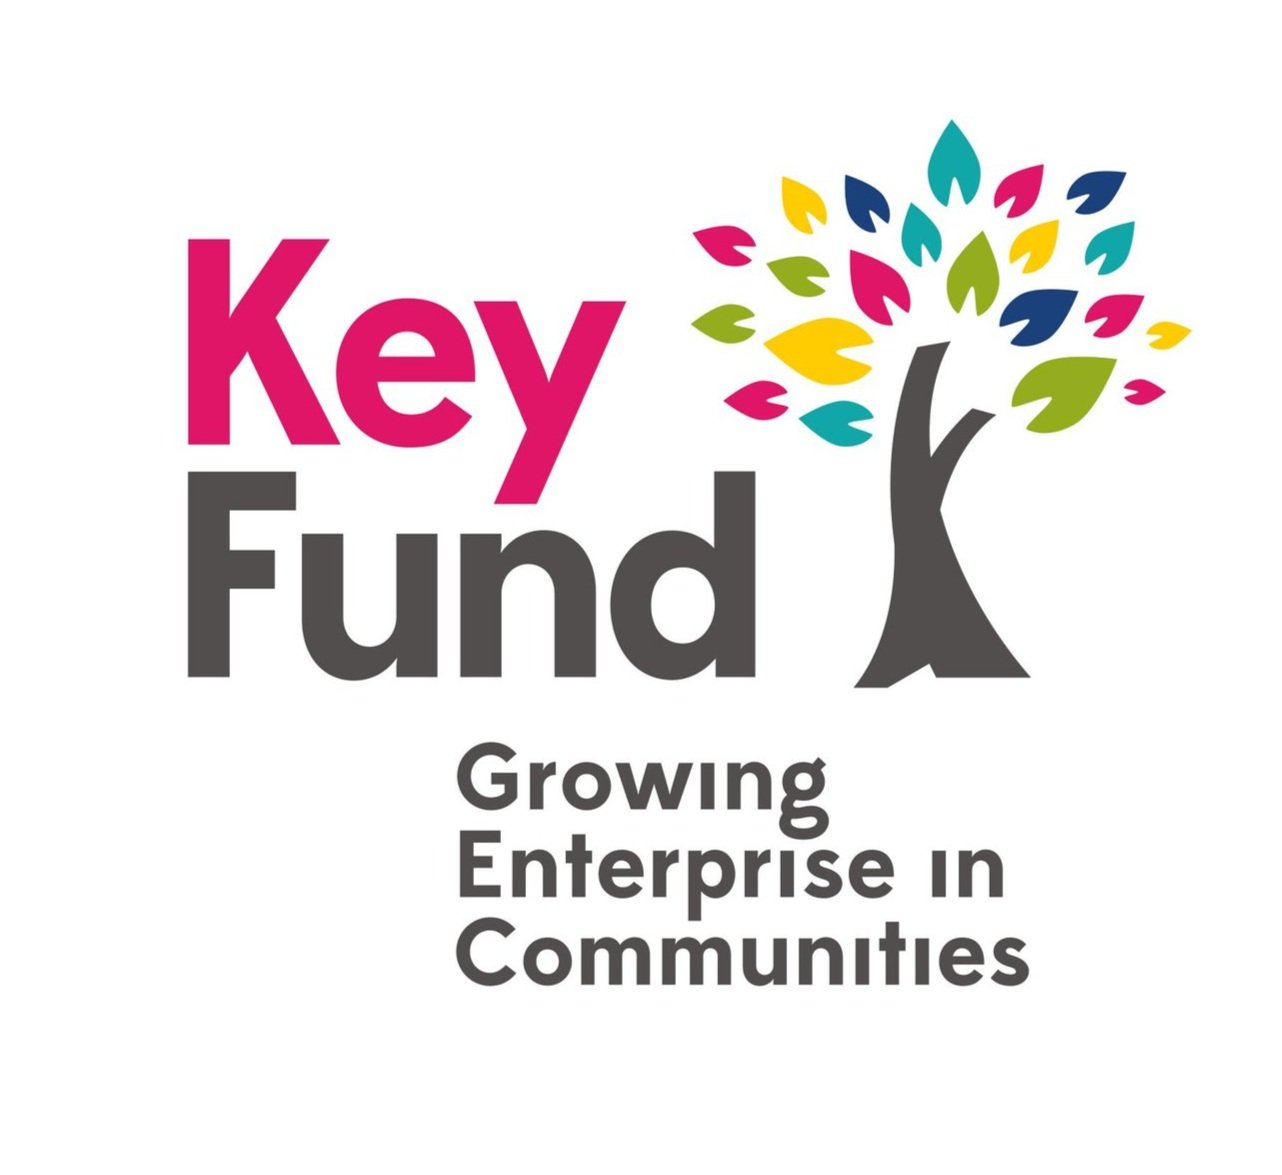 The Key Fund